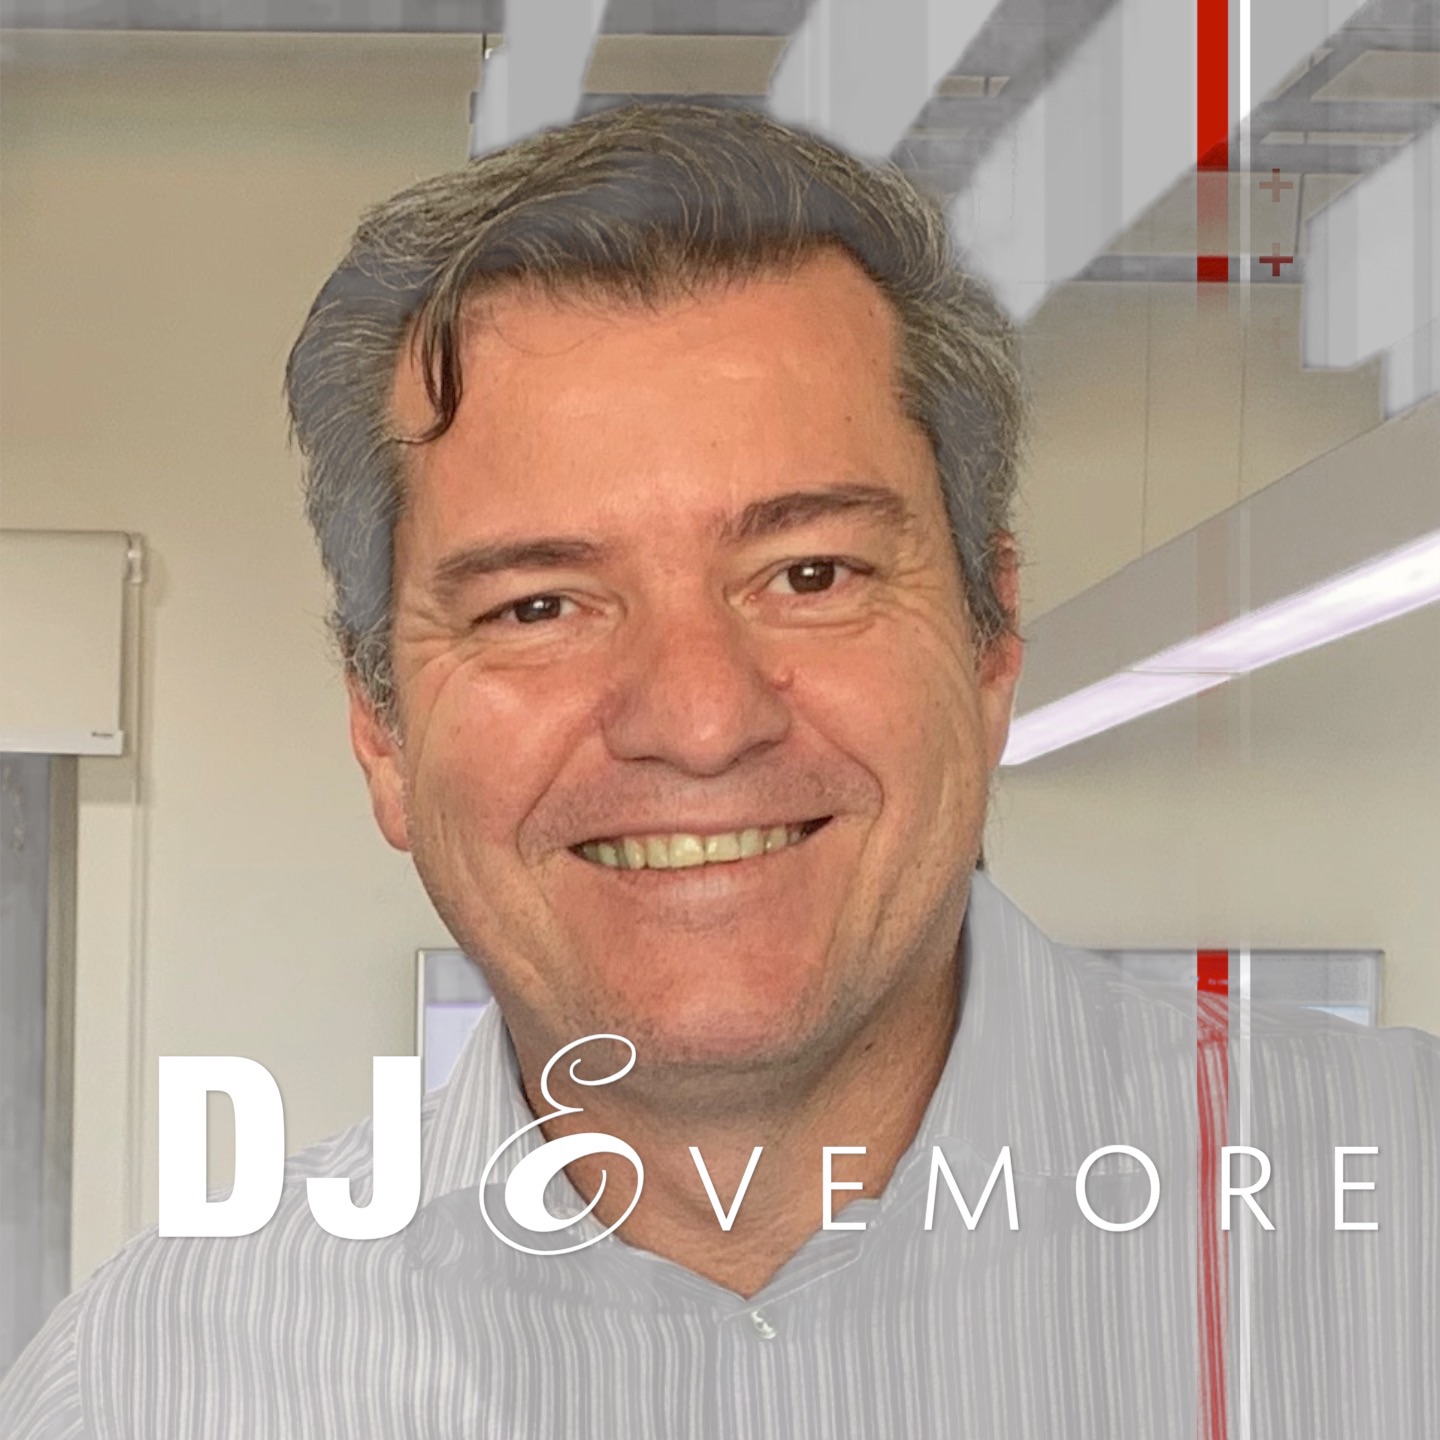 DJ Evemore